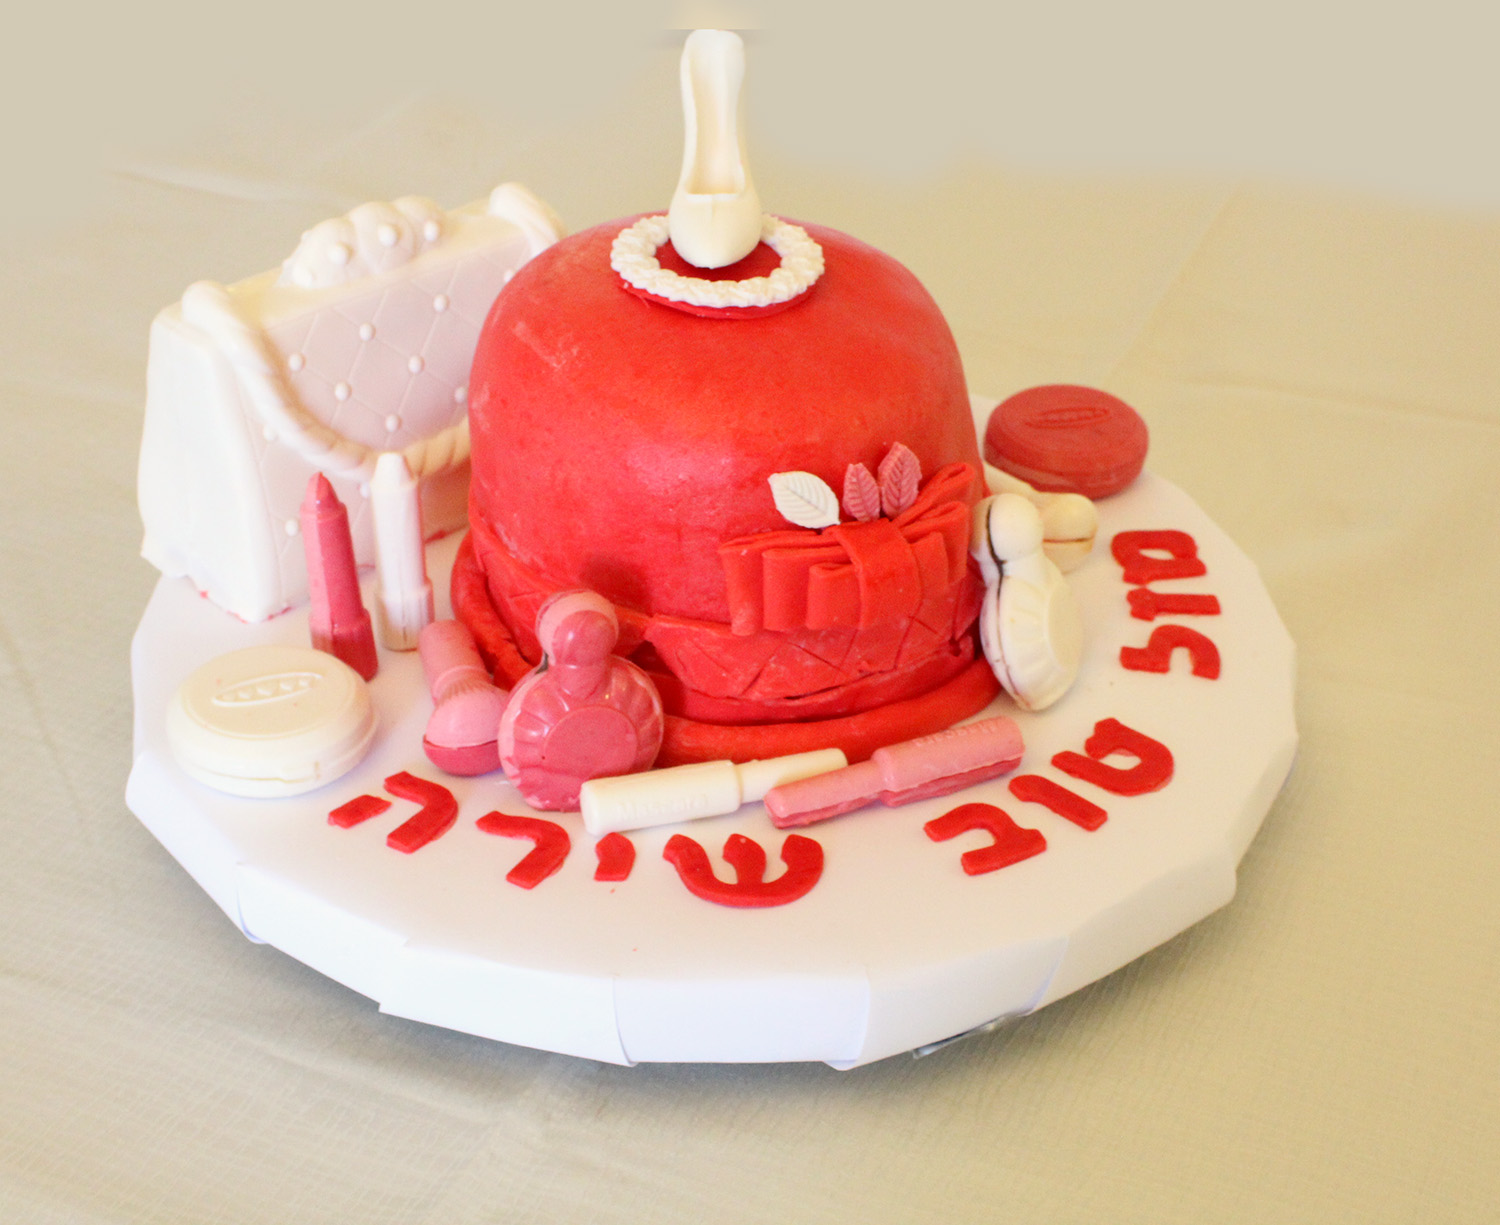 IMG 7262 - עוגת יומולדת לילדה מהממת